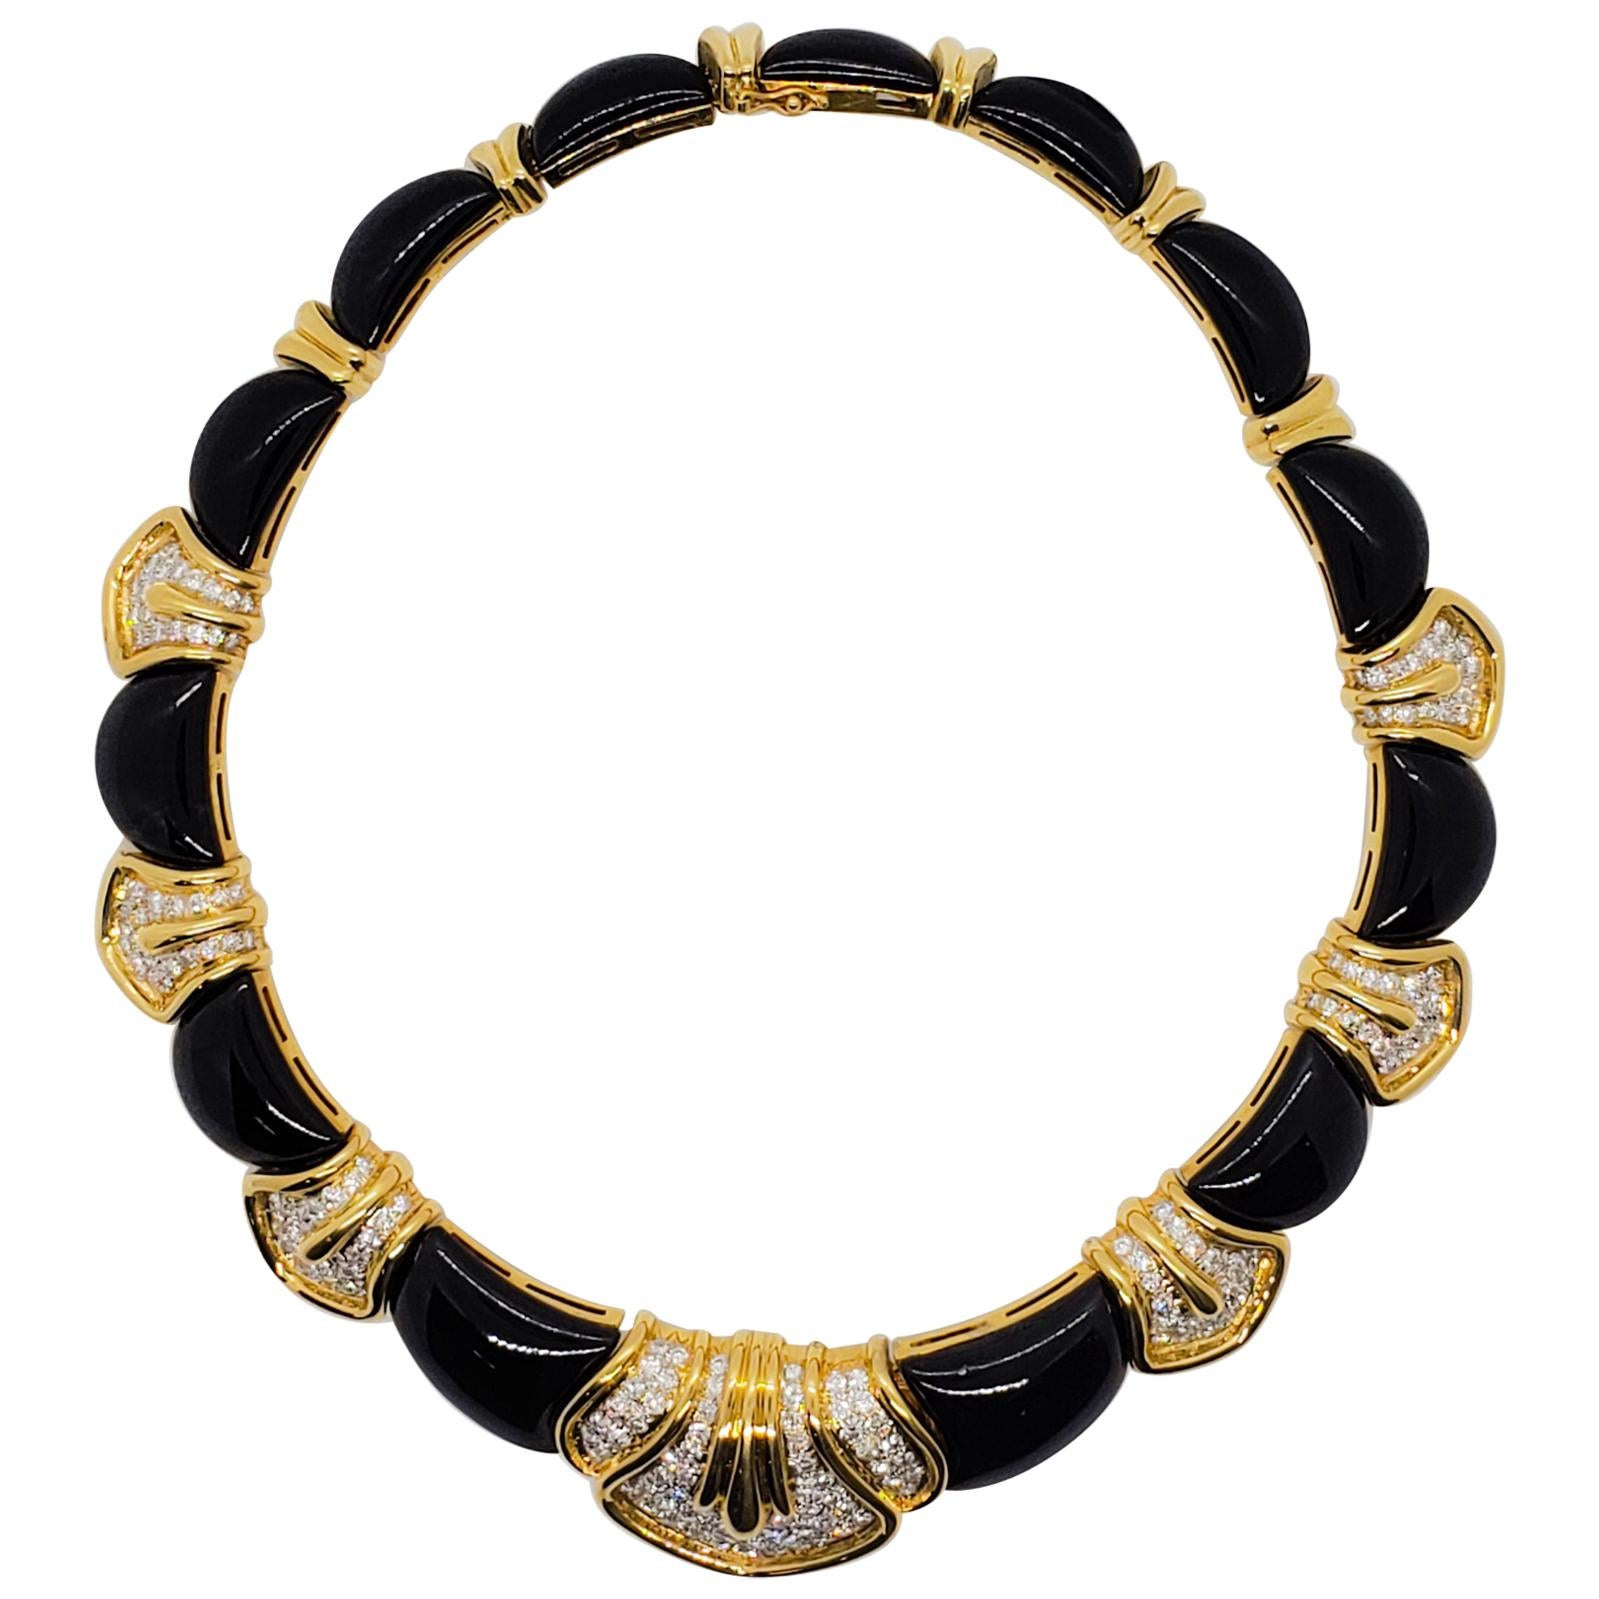 Onyx and White Diamond Choker Necklace in 18 Karat Yellow Gold